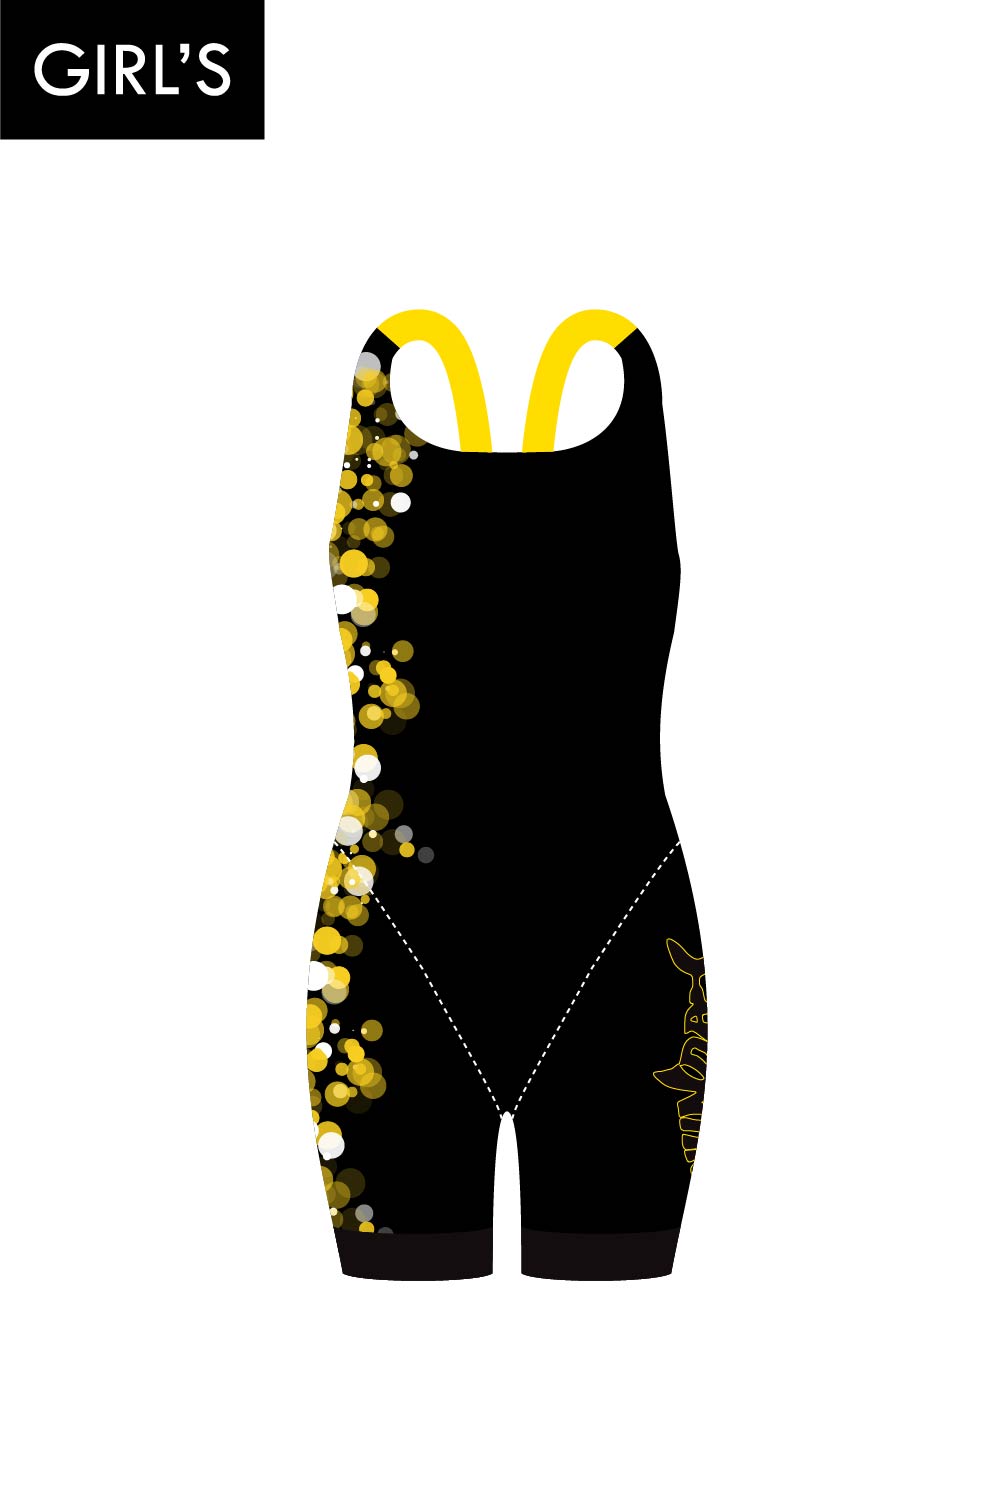 Nundah Sharks Girl's Open Back Race Suit